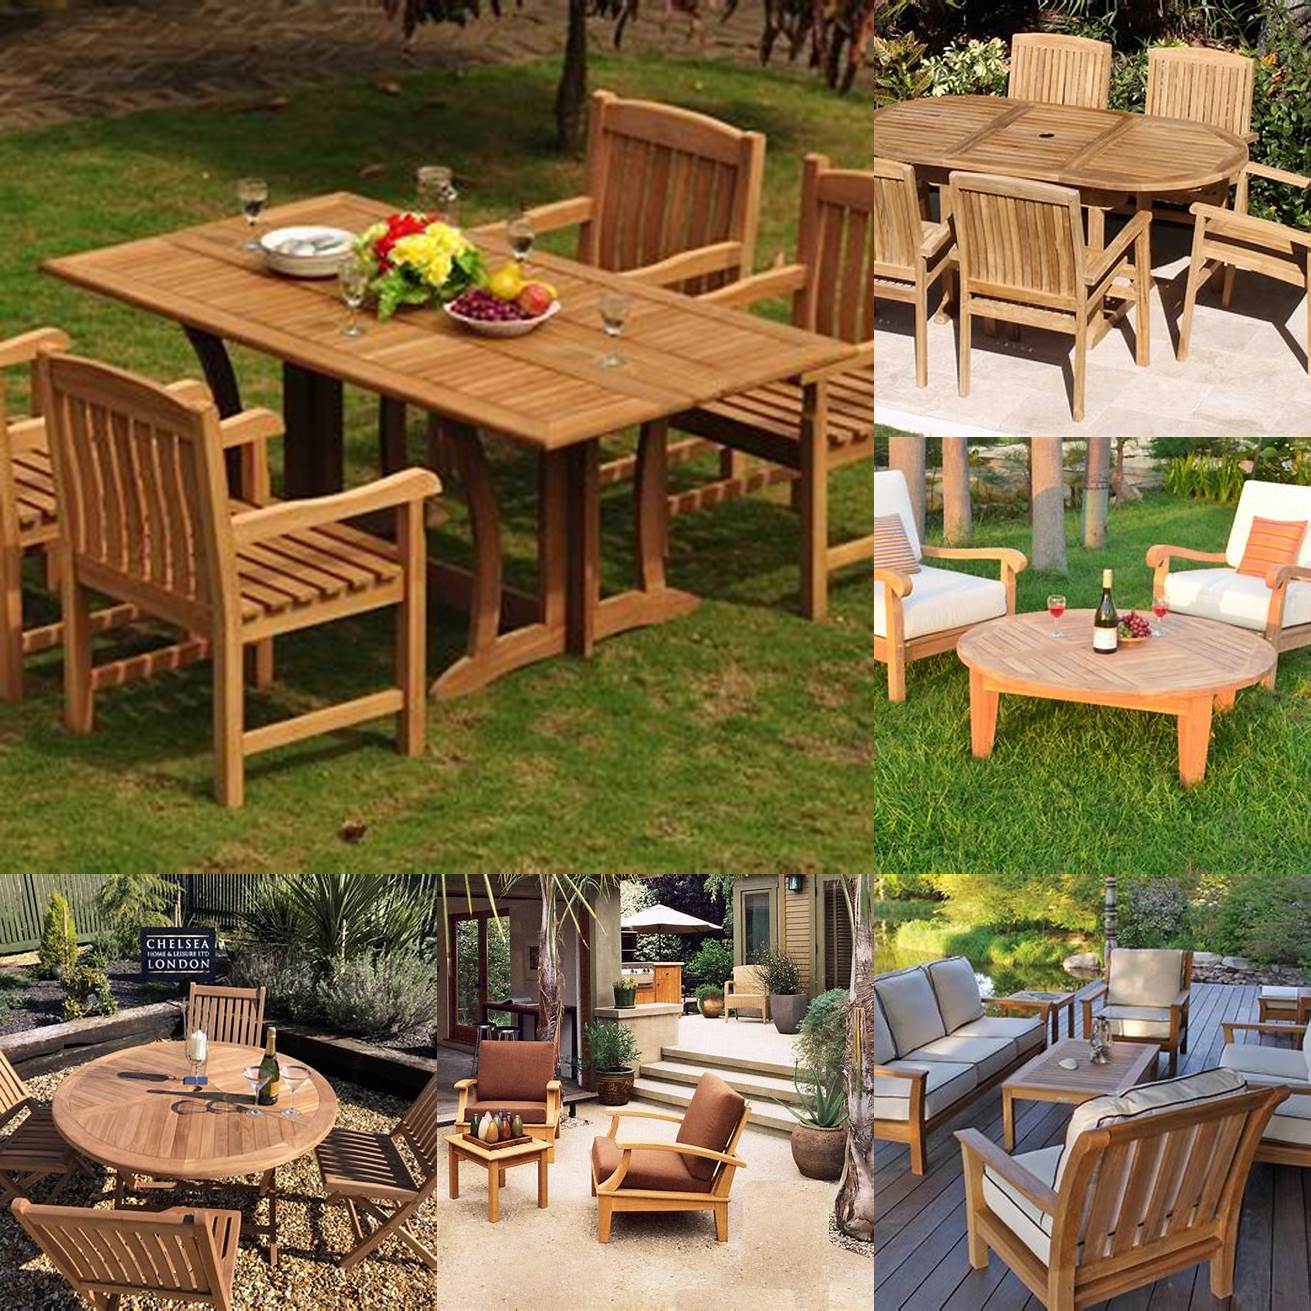 Teak furniture for outdoor entertaining